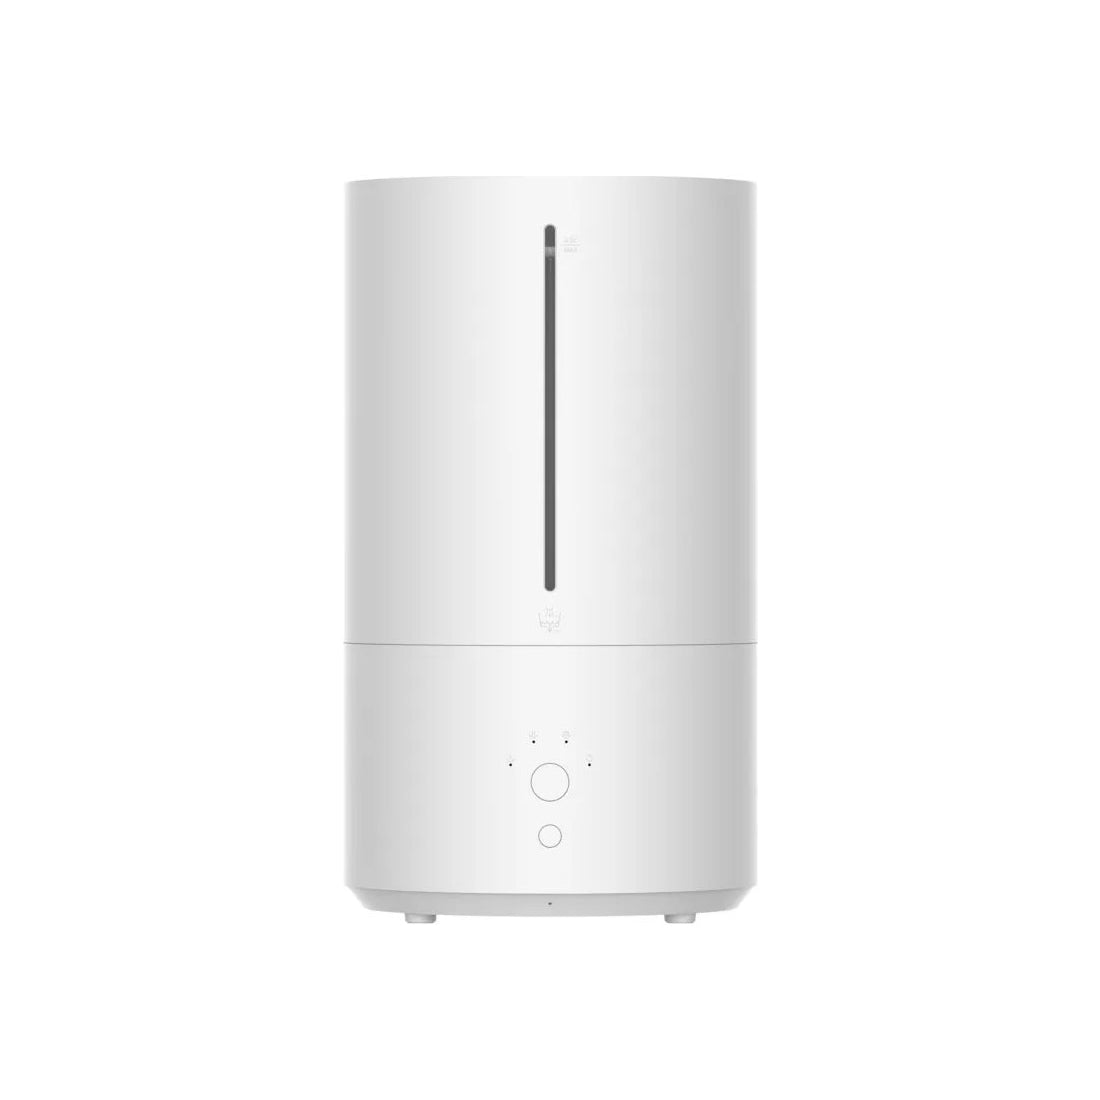 Xiaomi Smart Humidifier 2 - White - مرطب جو - Store 974 | ستور ٩٧٤